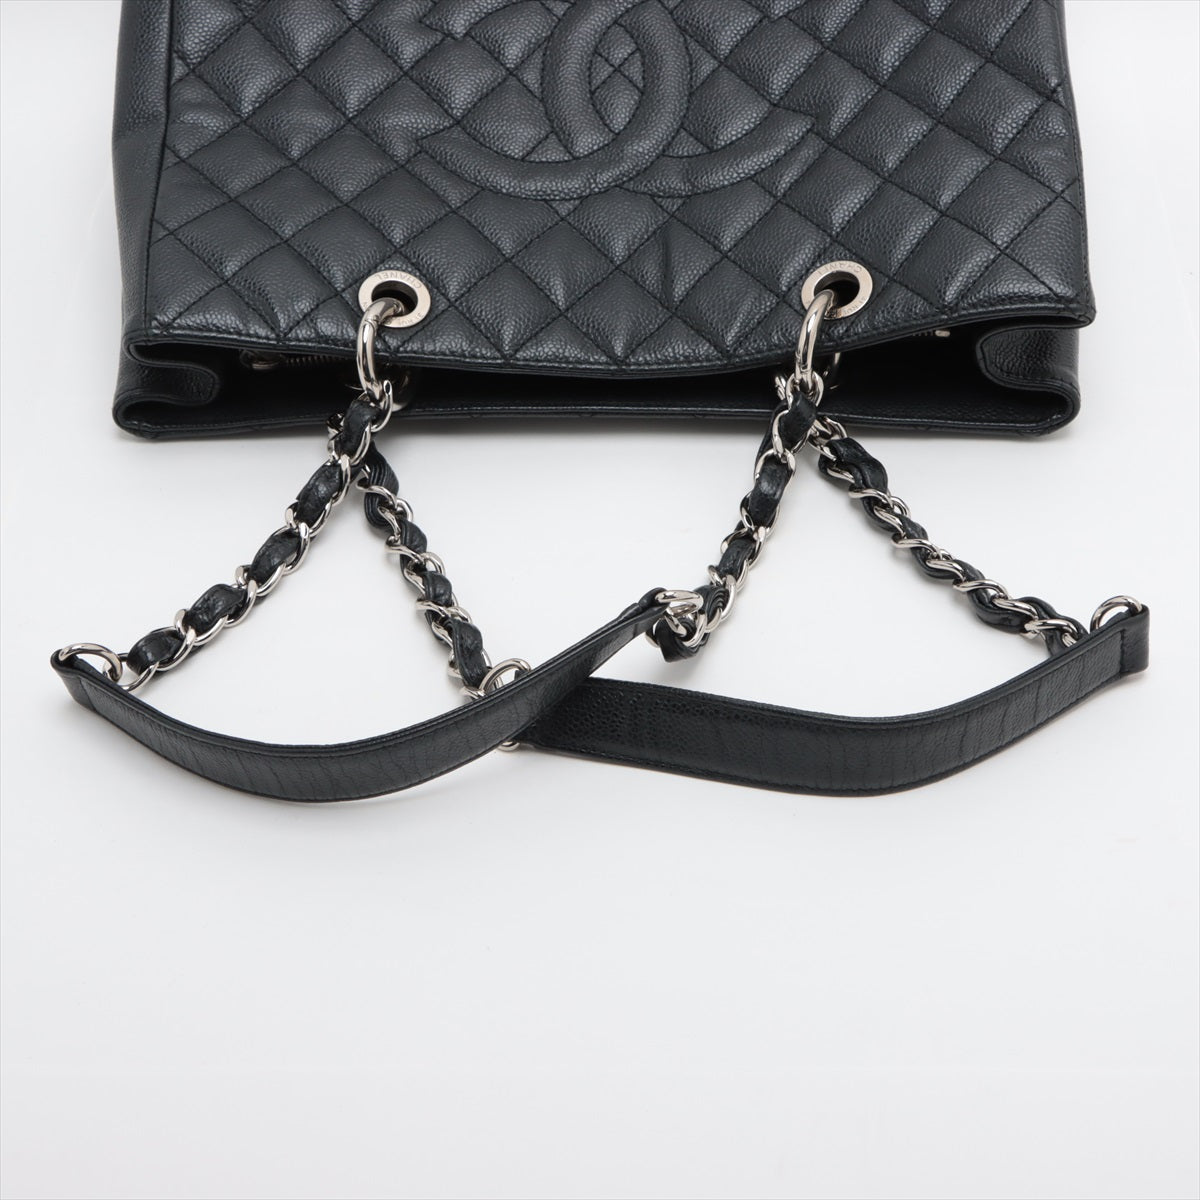 Chanel GST Caviar Skin Chain Tote Bag Black Silver Metal Fittings 16XXXXXX